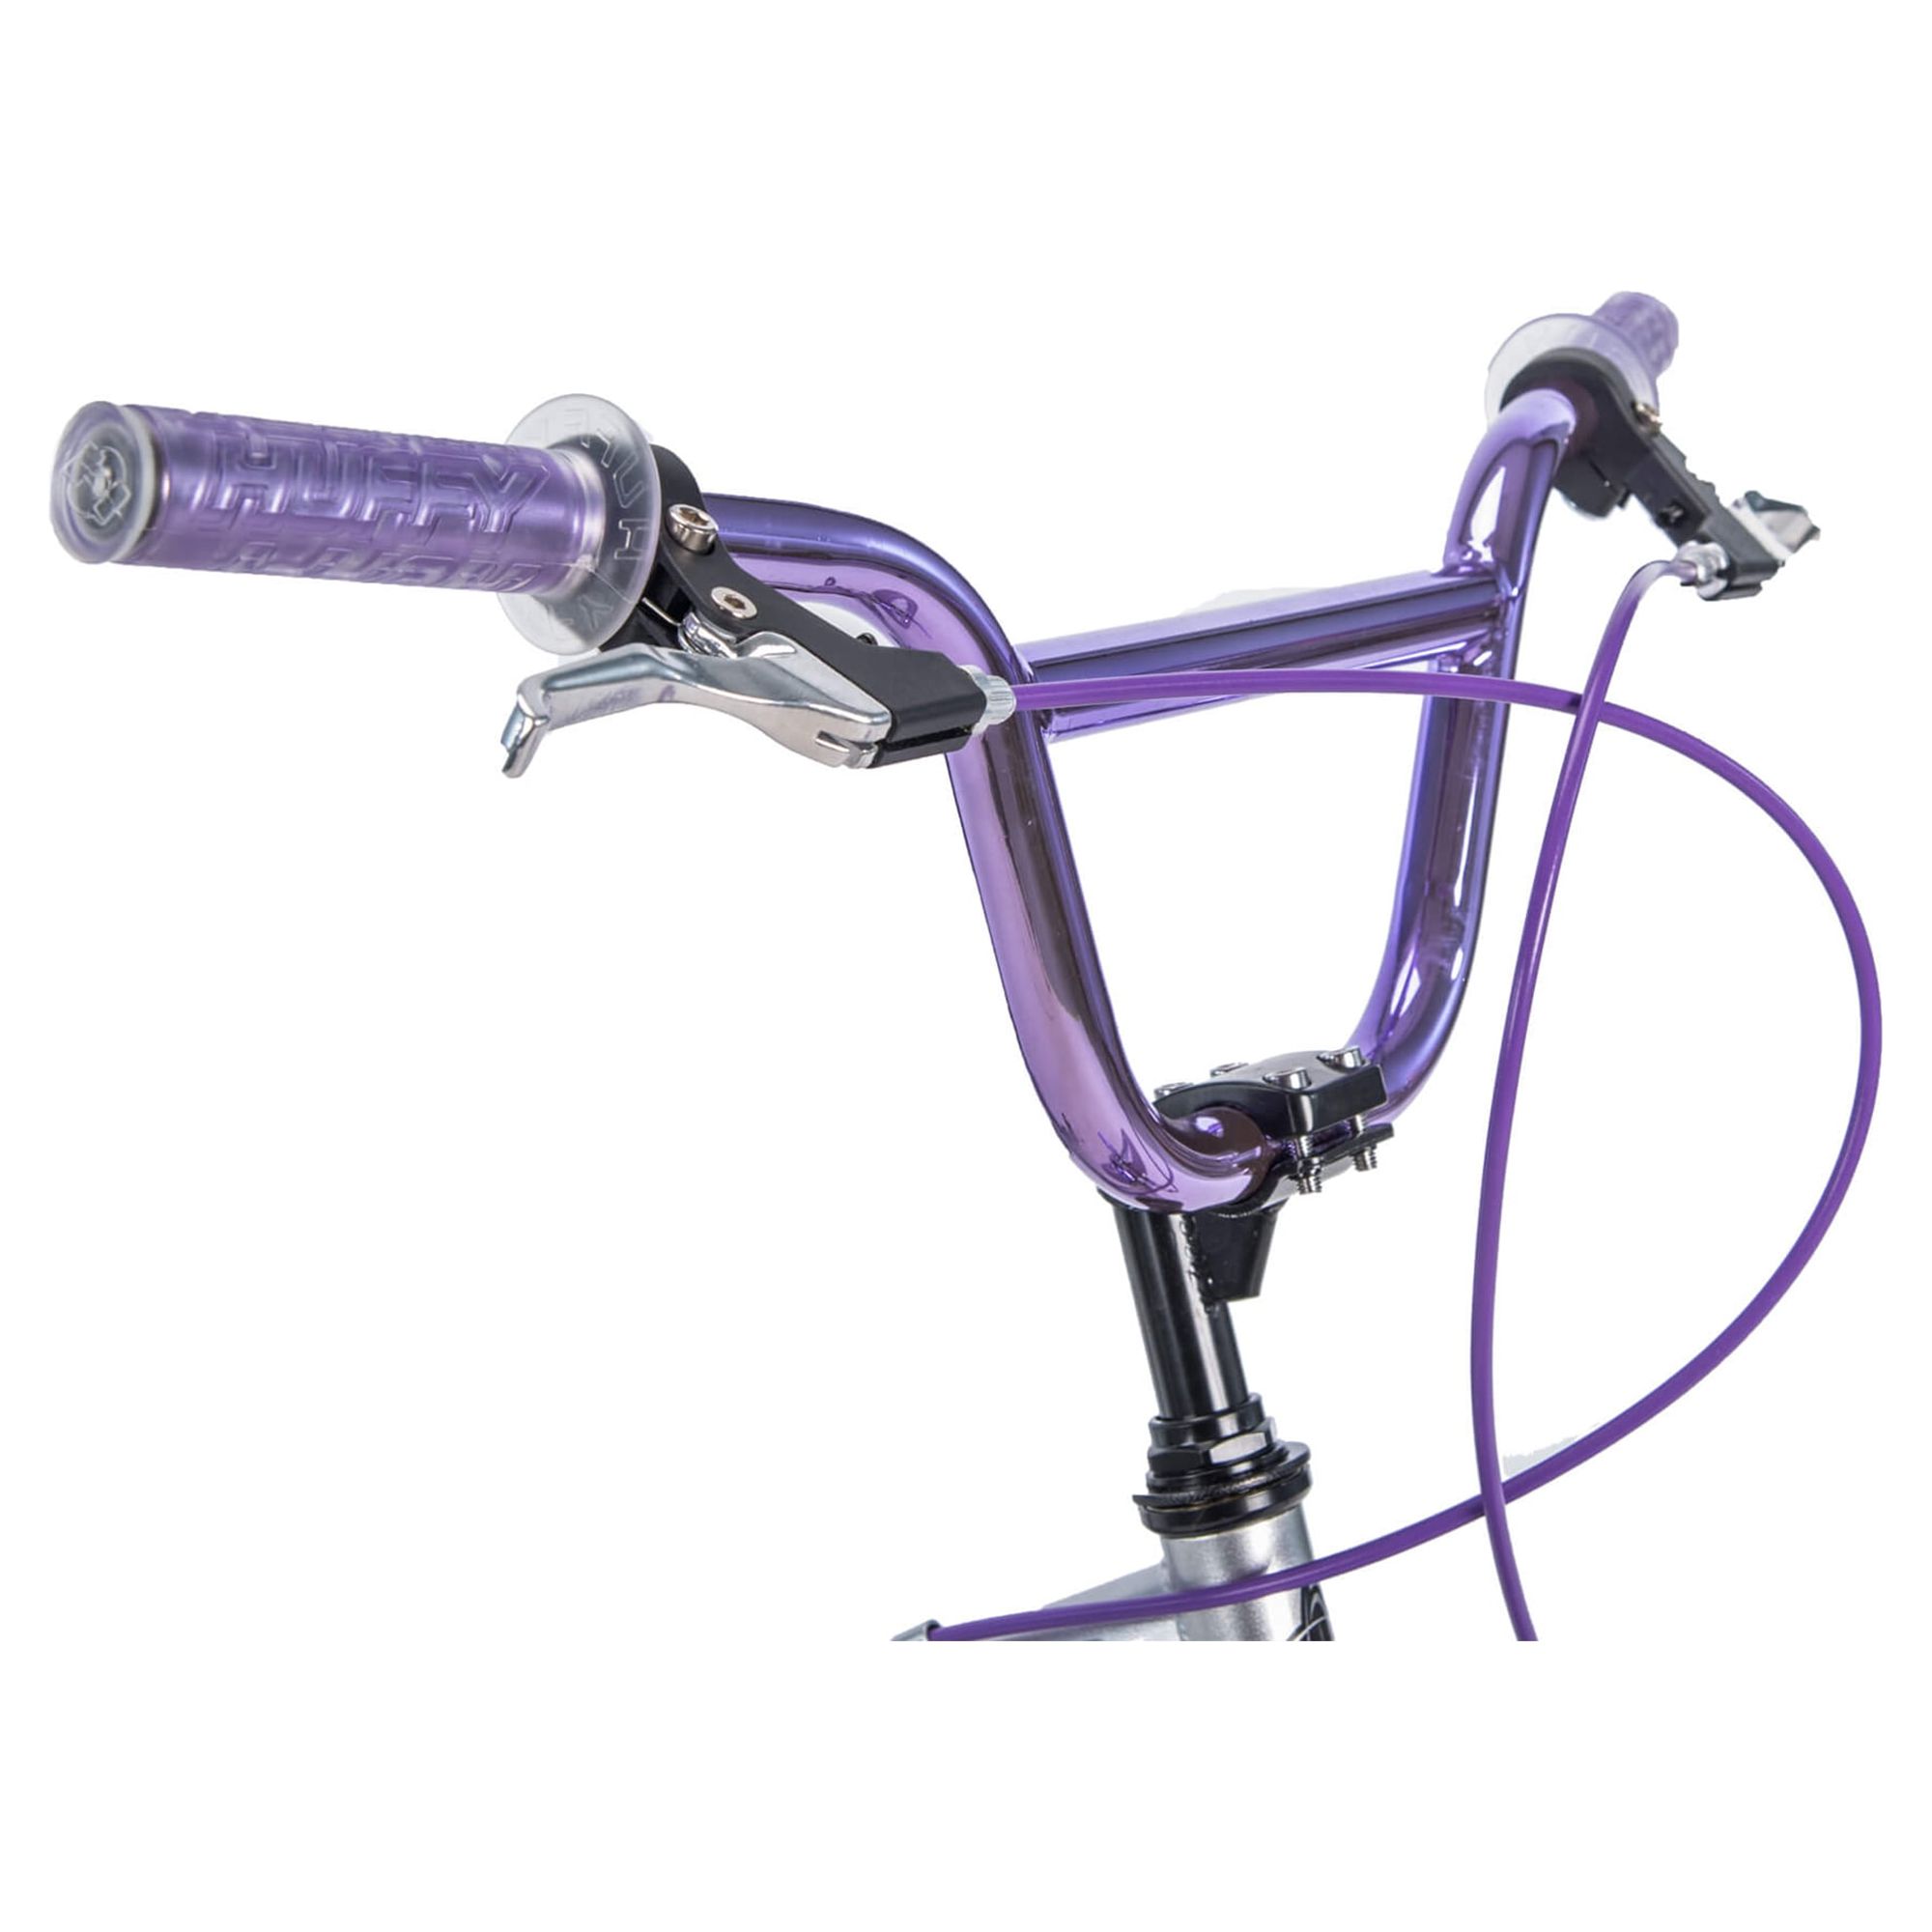 Huffy 20" Radium Girls' Metaloid BMX-Style Bike, Purple - image 3 of 6